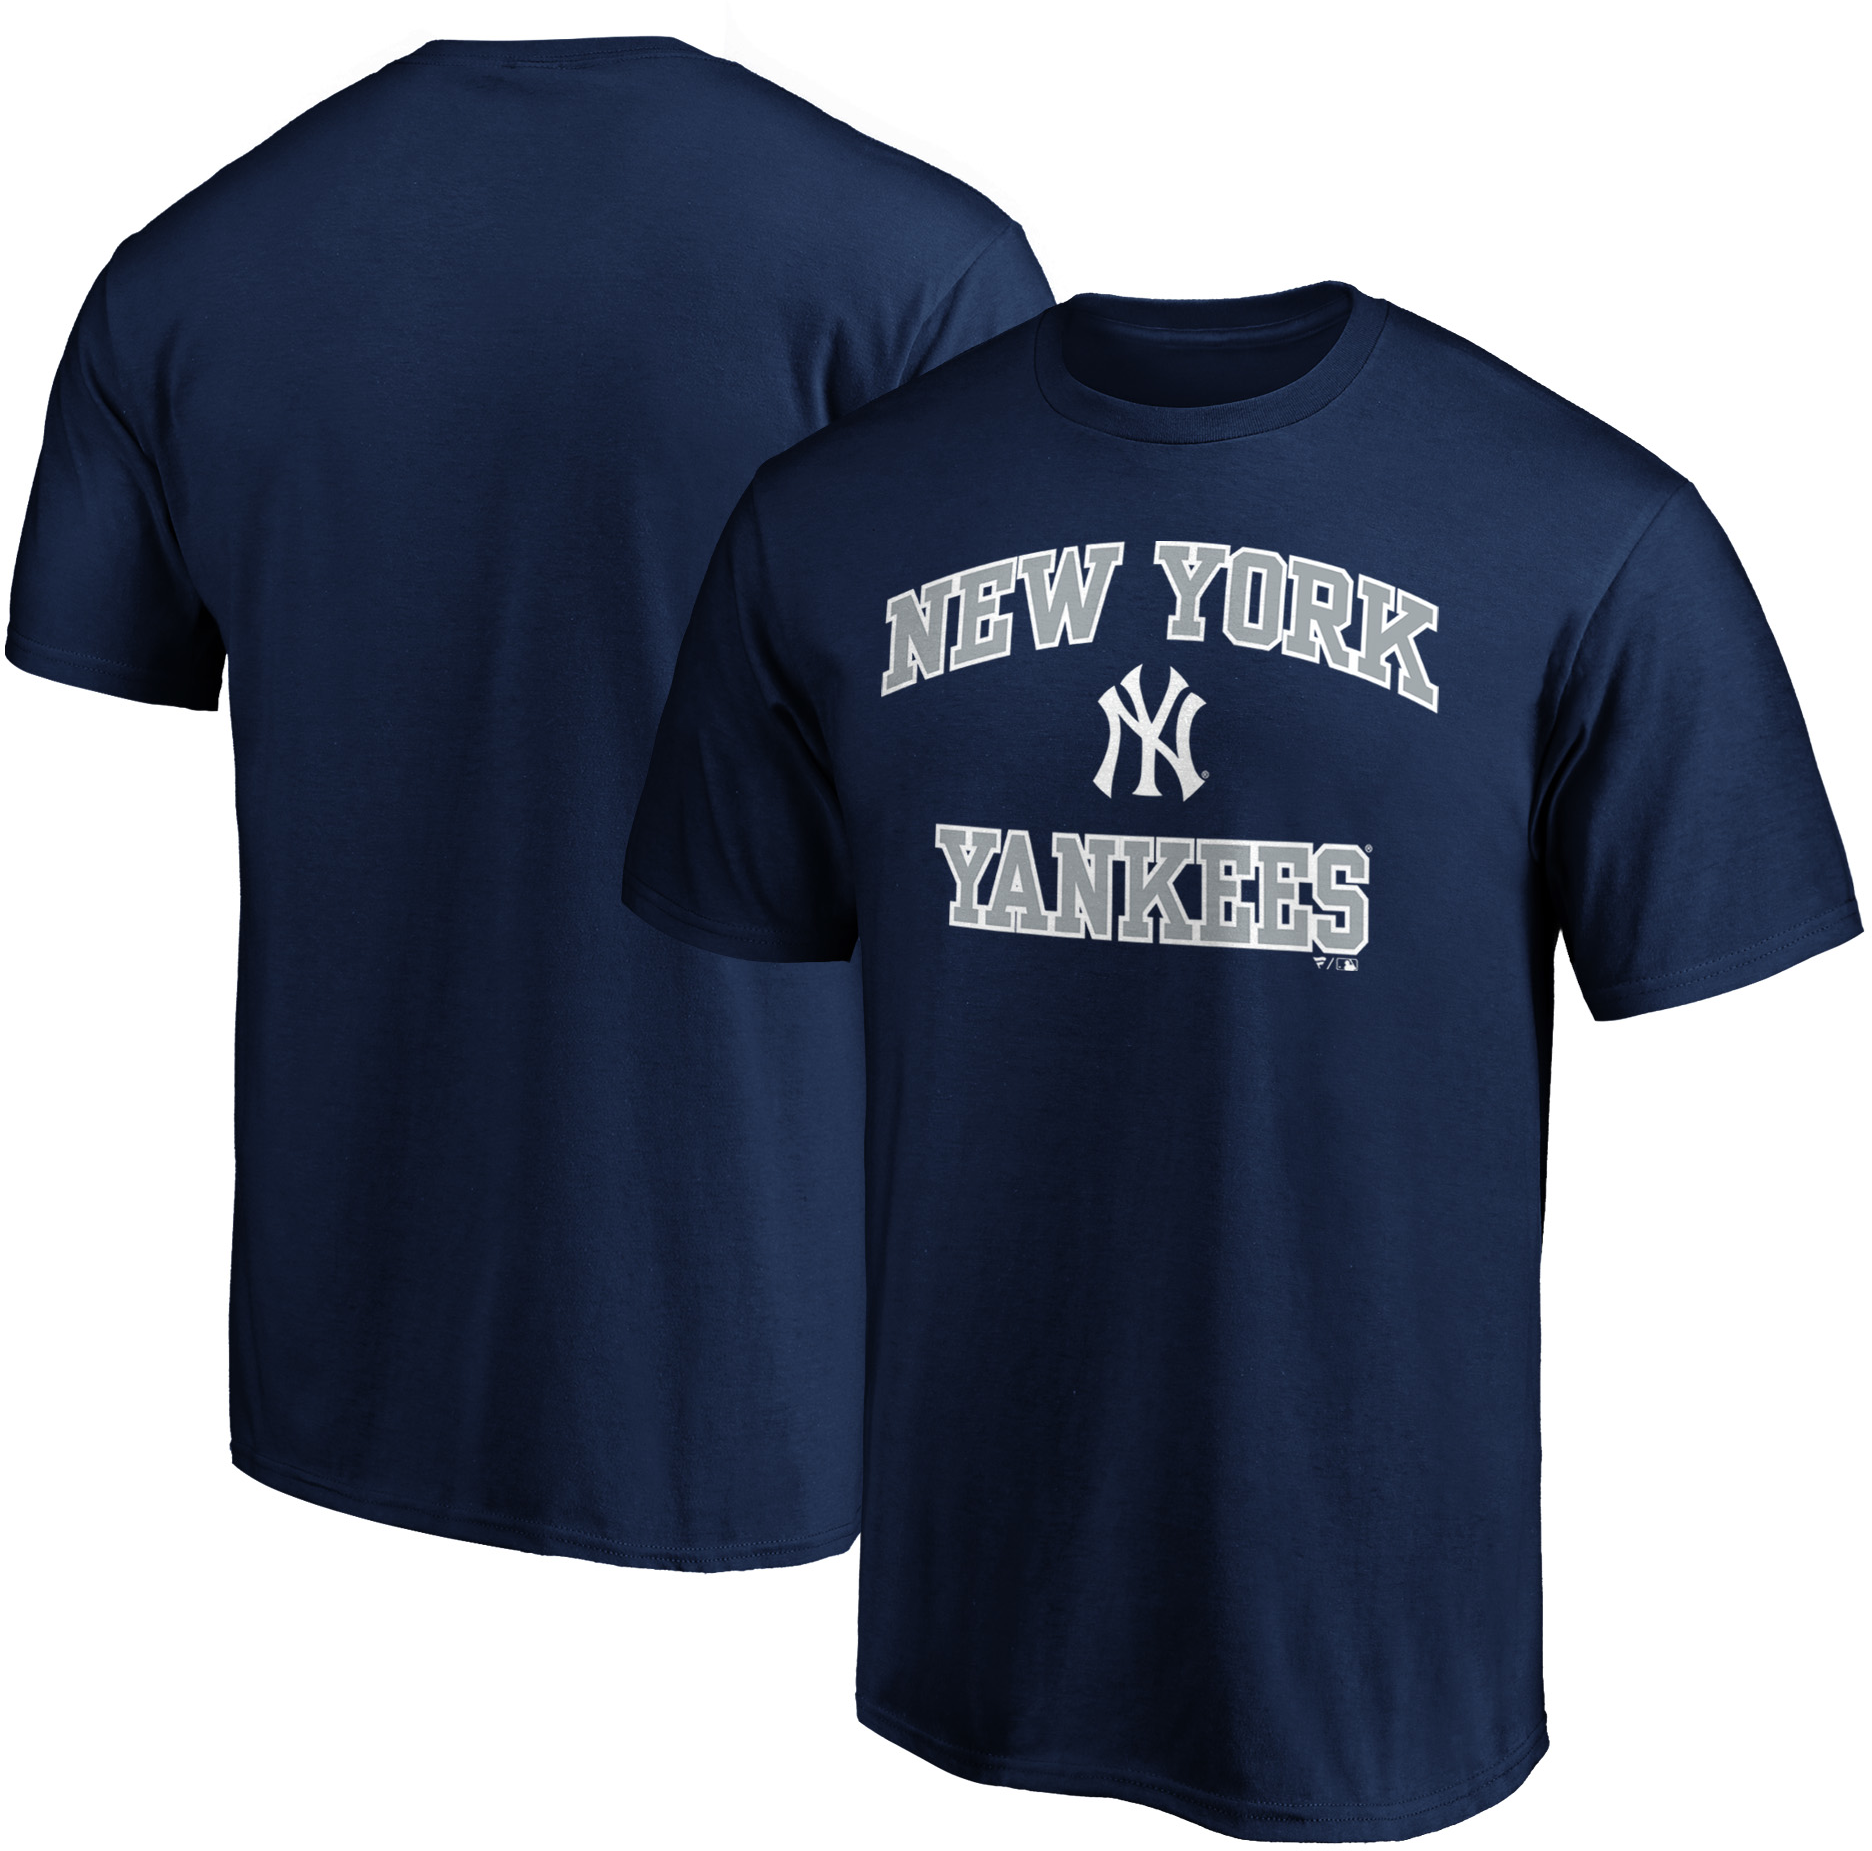 New York Yankees Baseball Love Tee Shirt 4T / Navy Blue